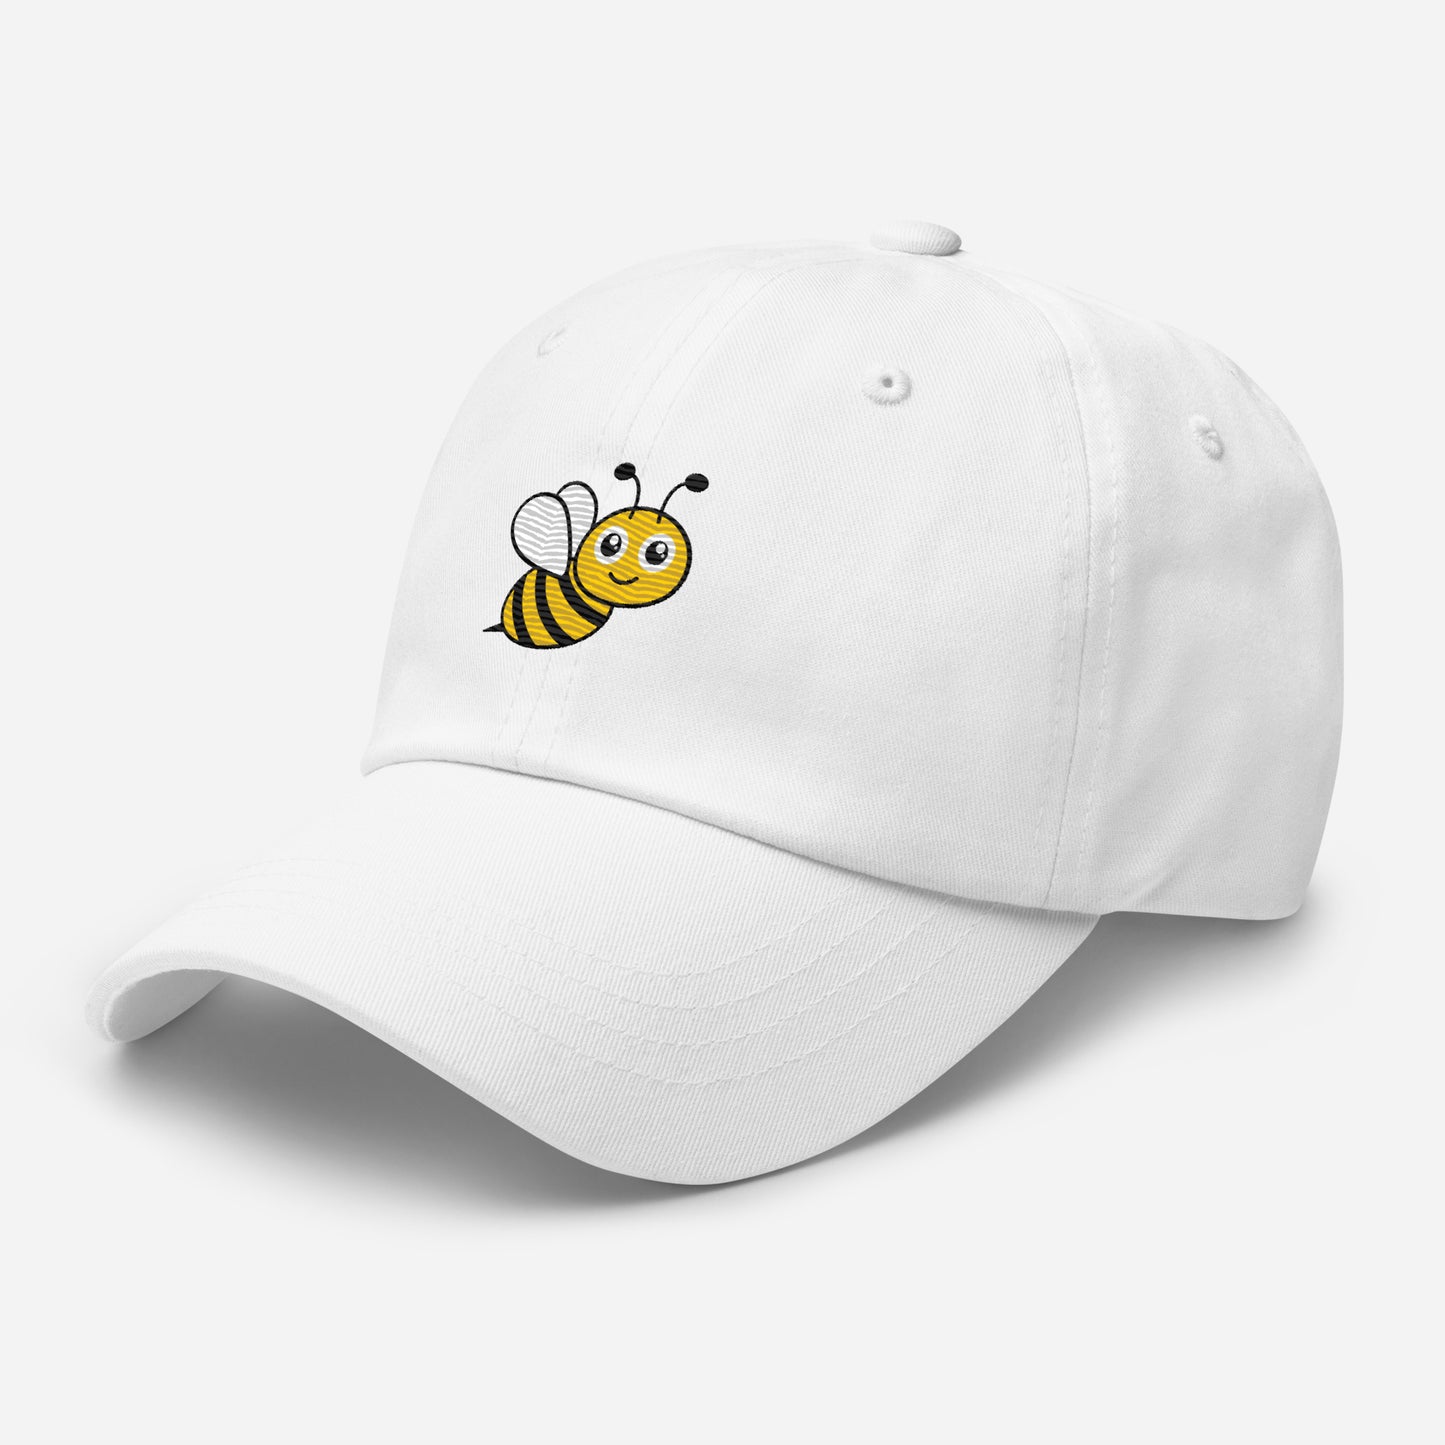 Bee Dad hat